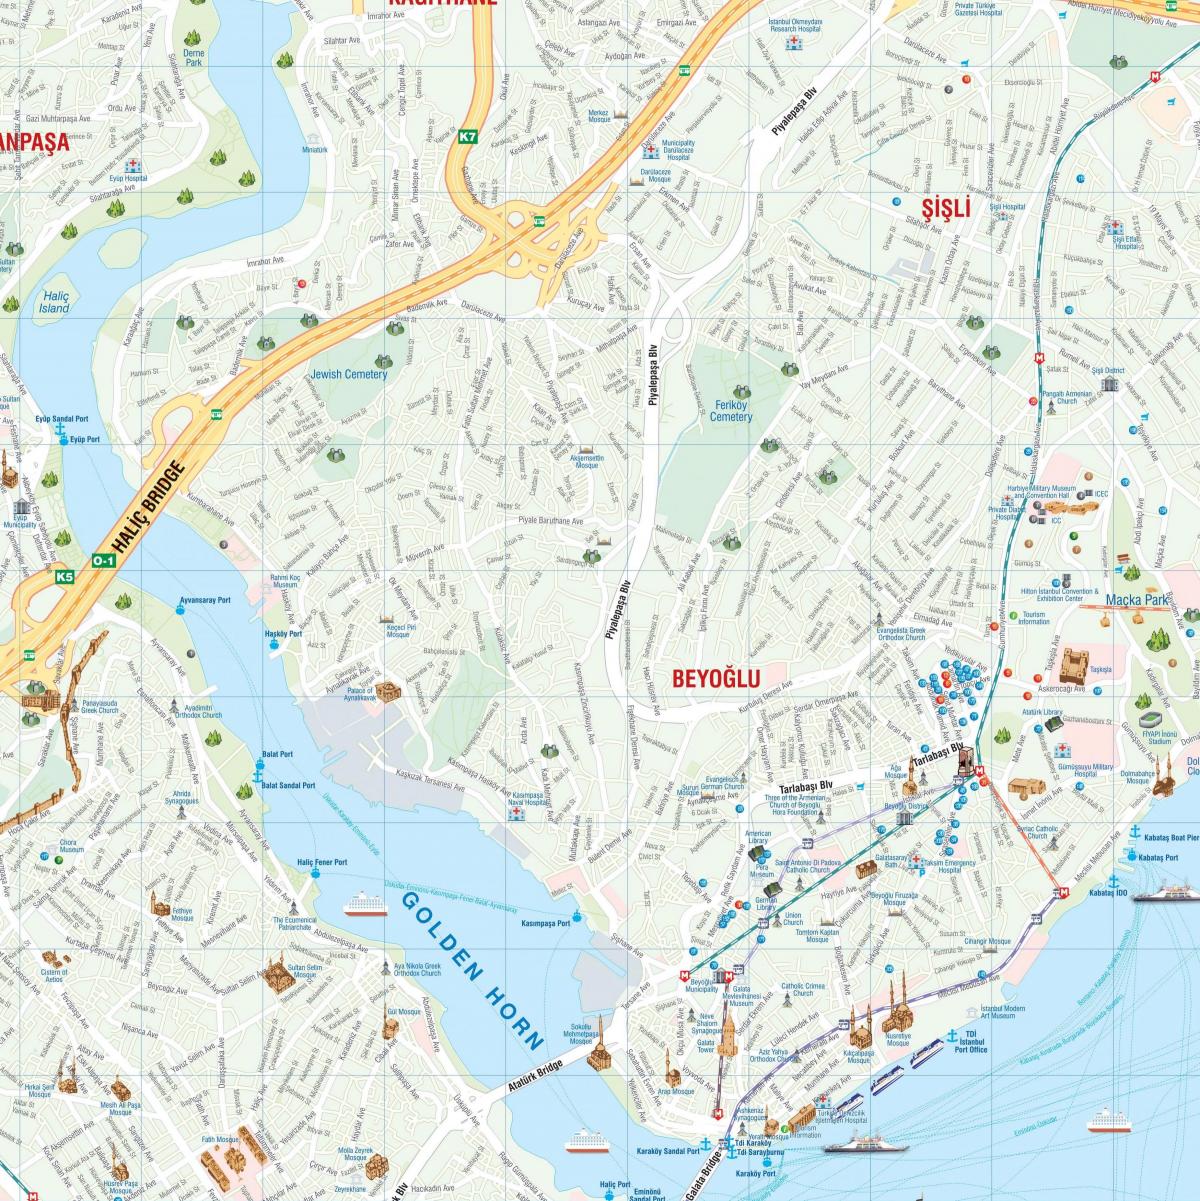 mappa di pera istanbul